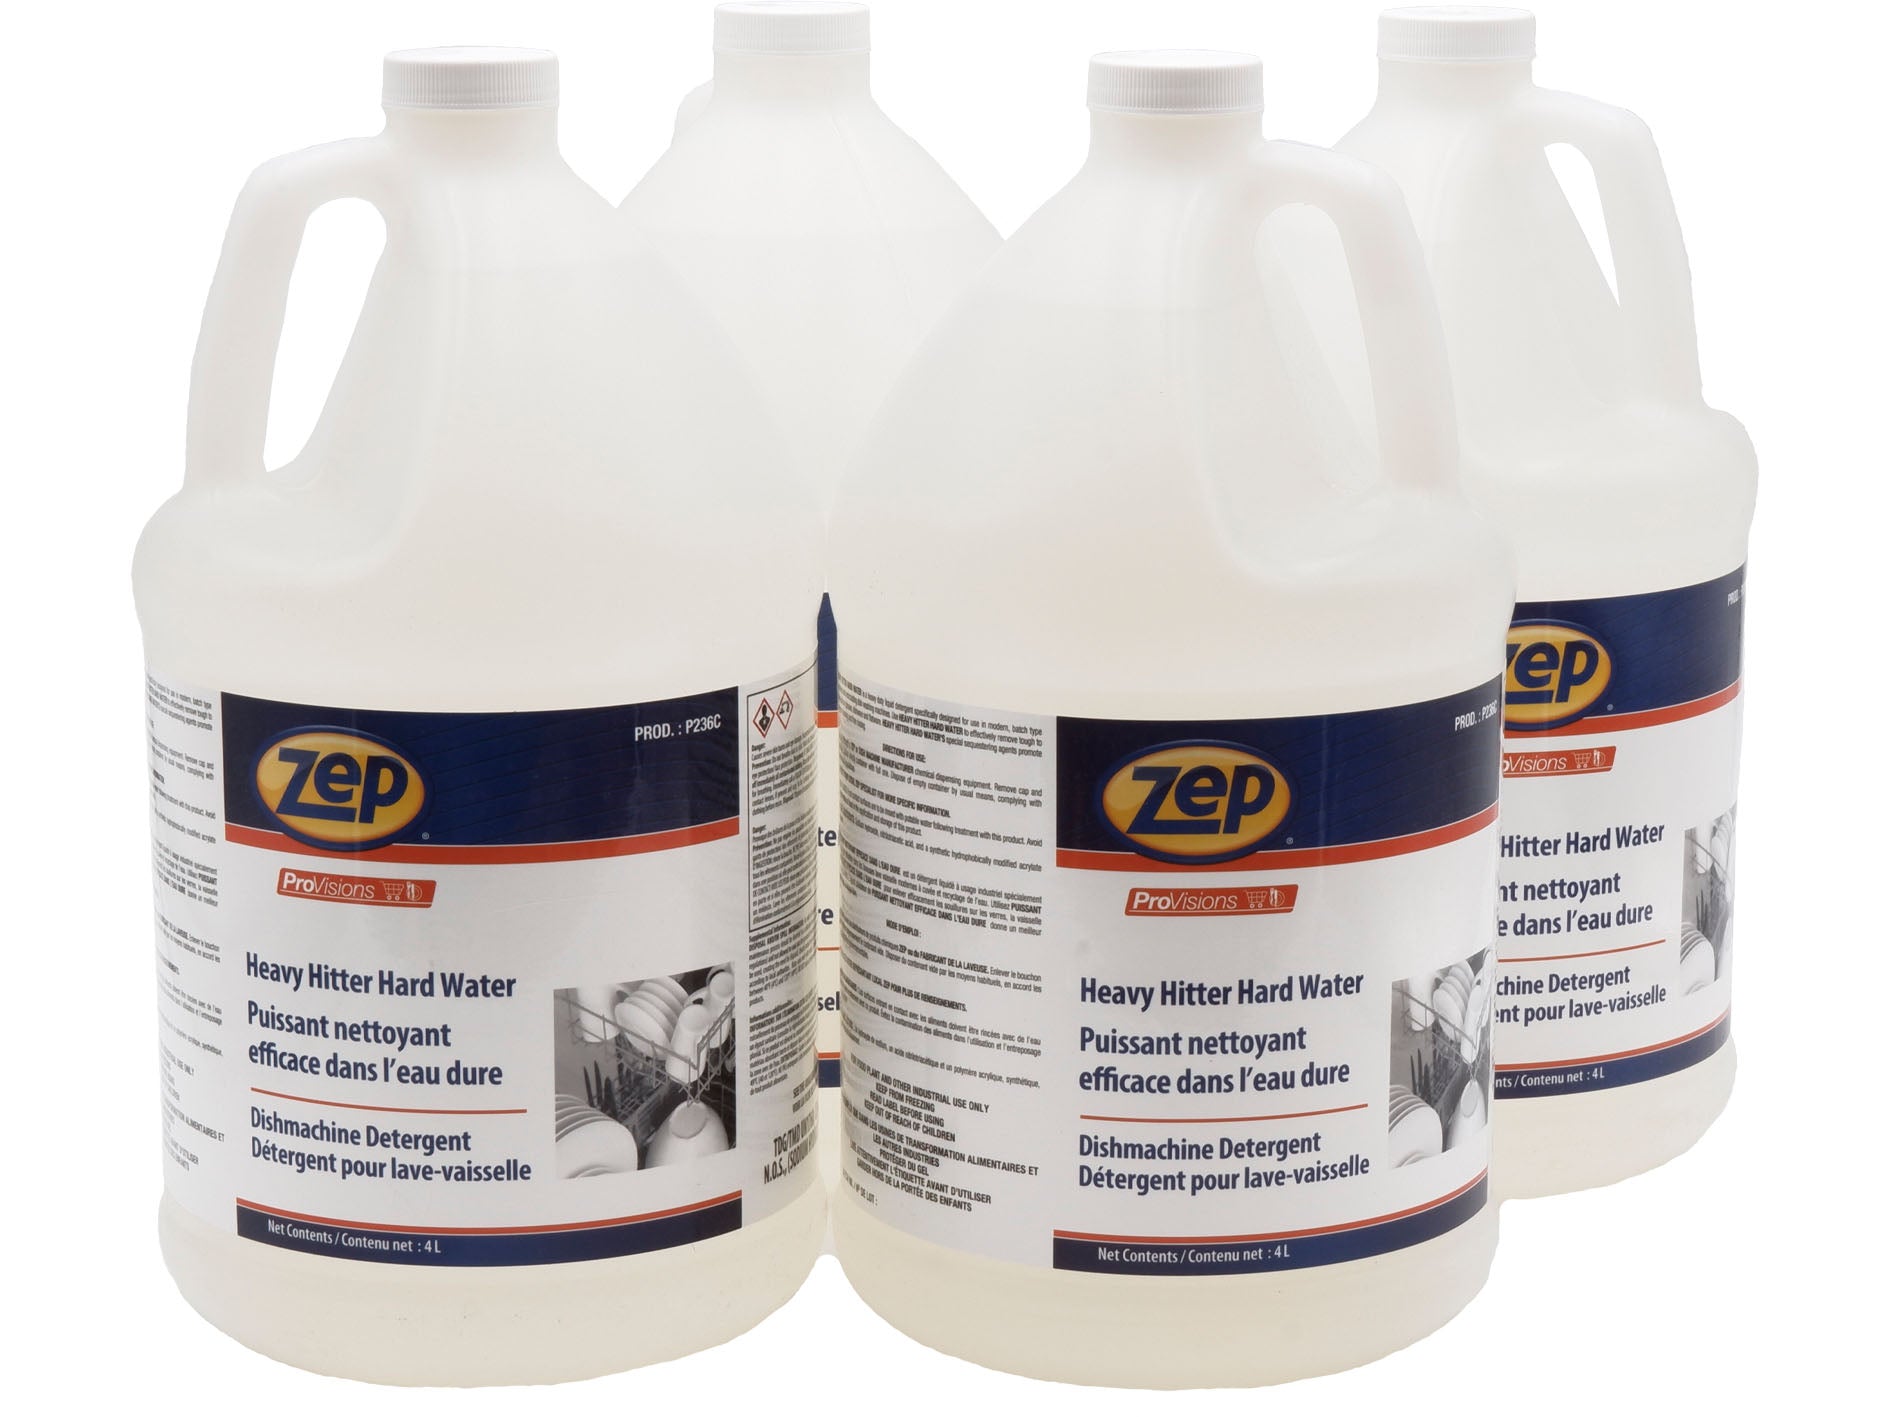 Zep Heavy Hitter Hard Water Commercial Dishwasher Detergent | 1 Gallon Jug - Case of 4